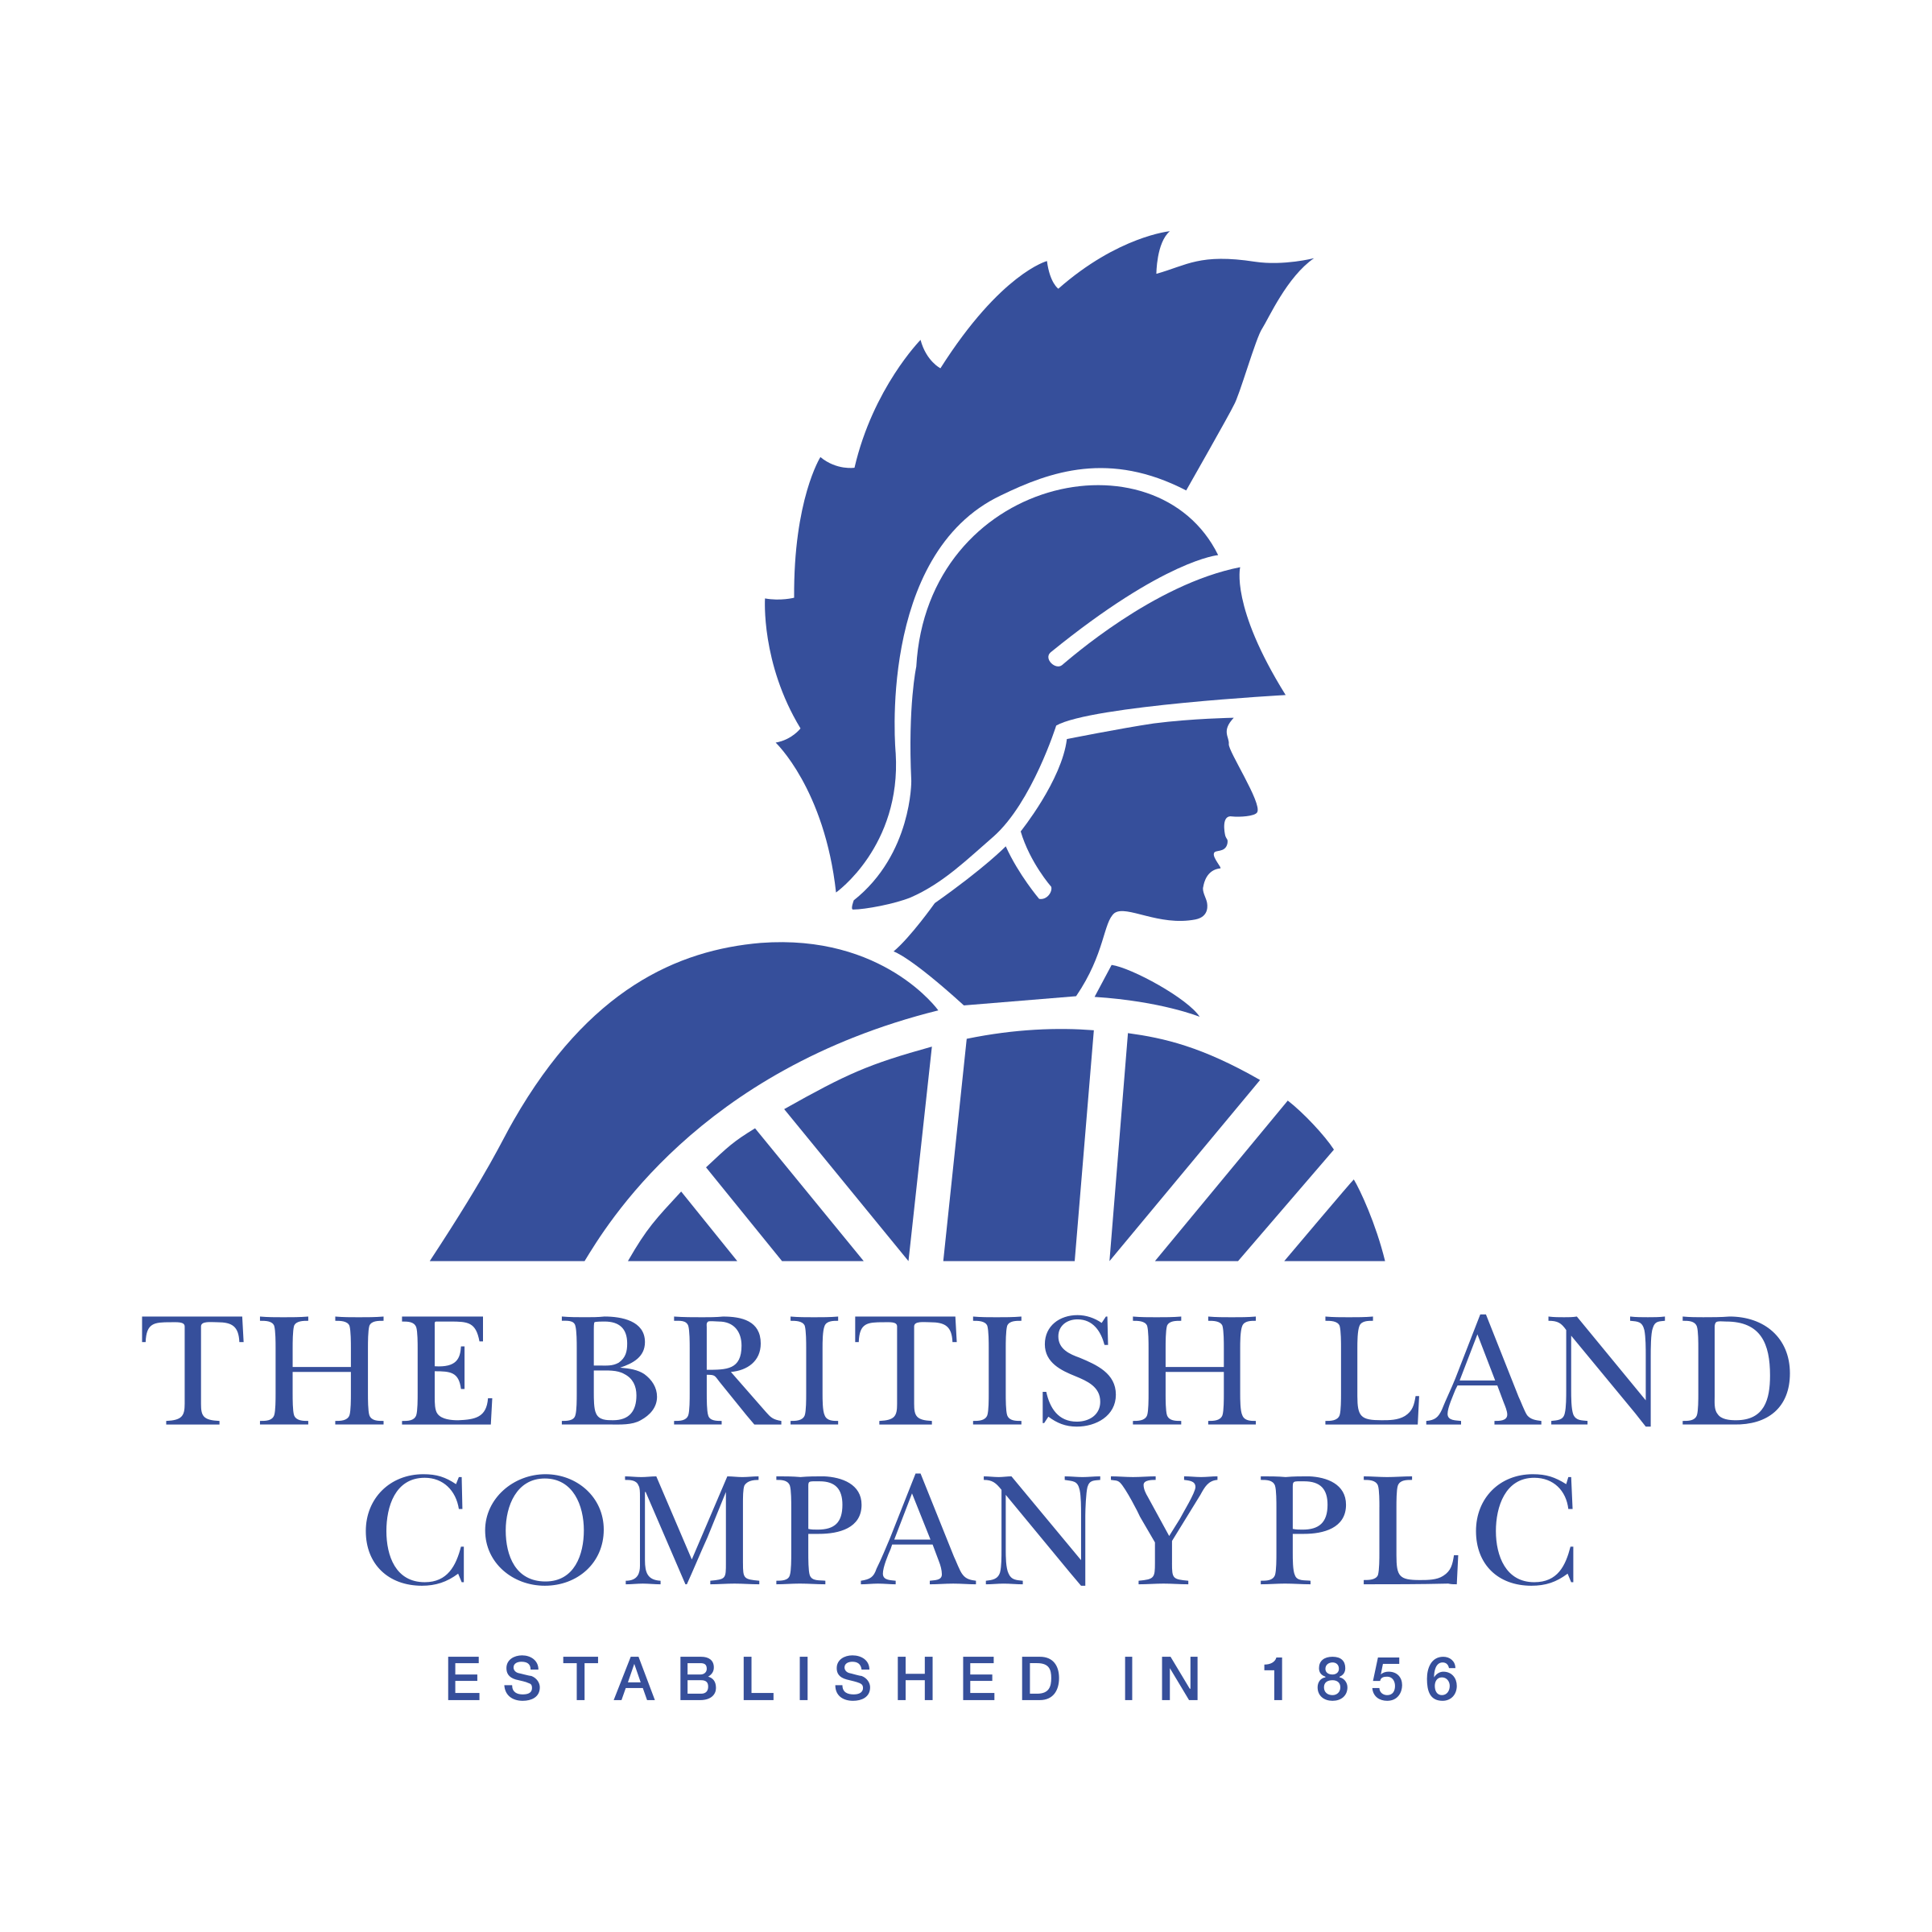 British Company Logo - The British Land Company Logo PNG Transparent & SVG Vector - Freebie ...